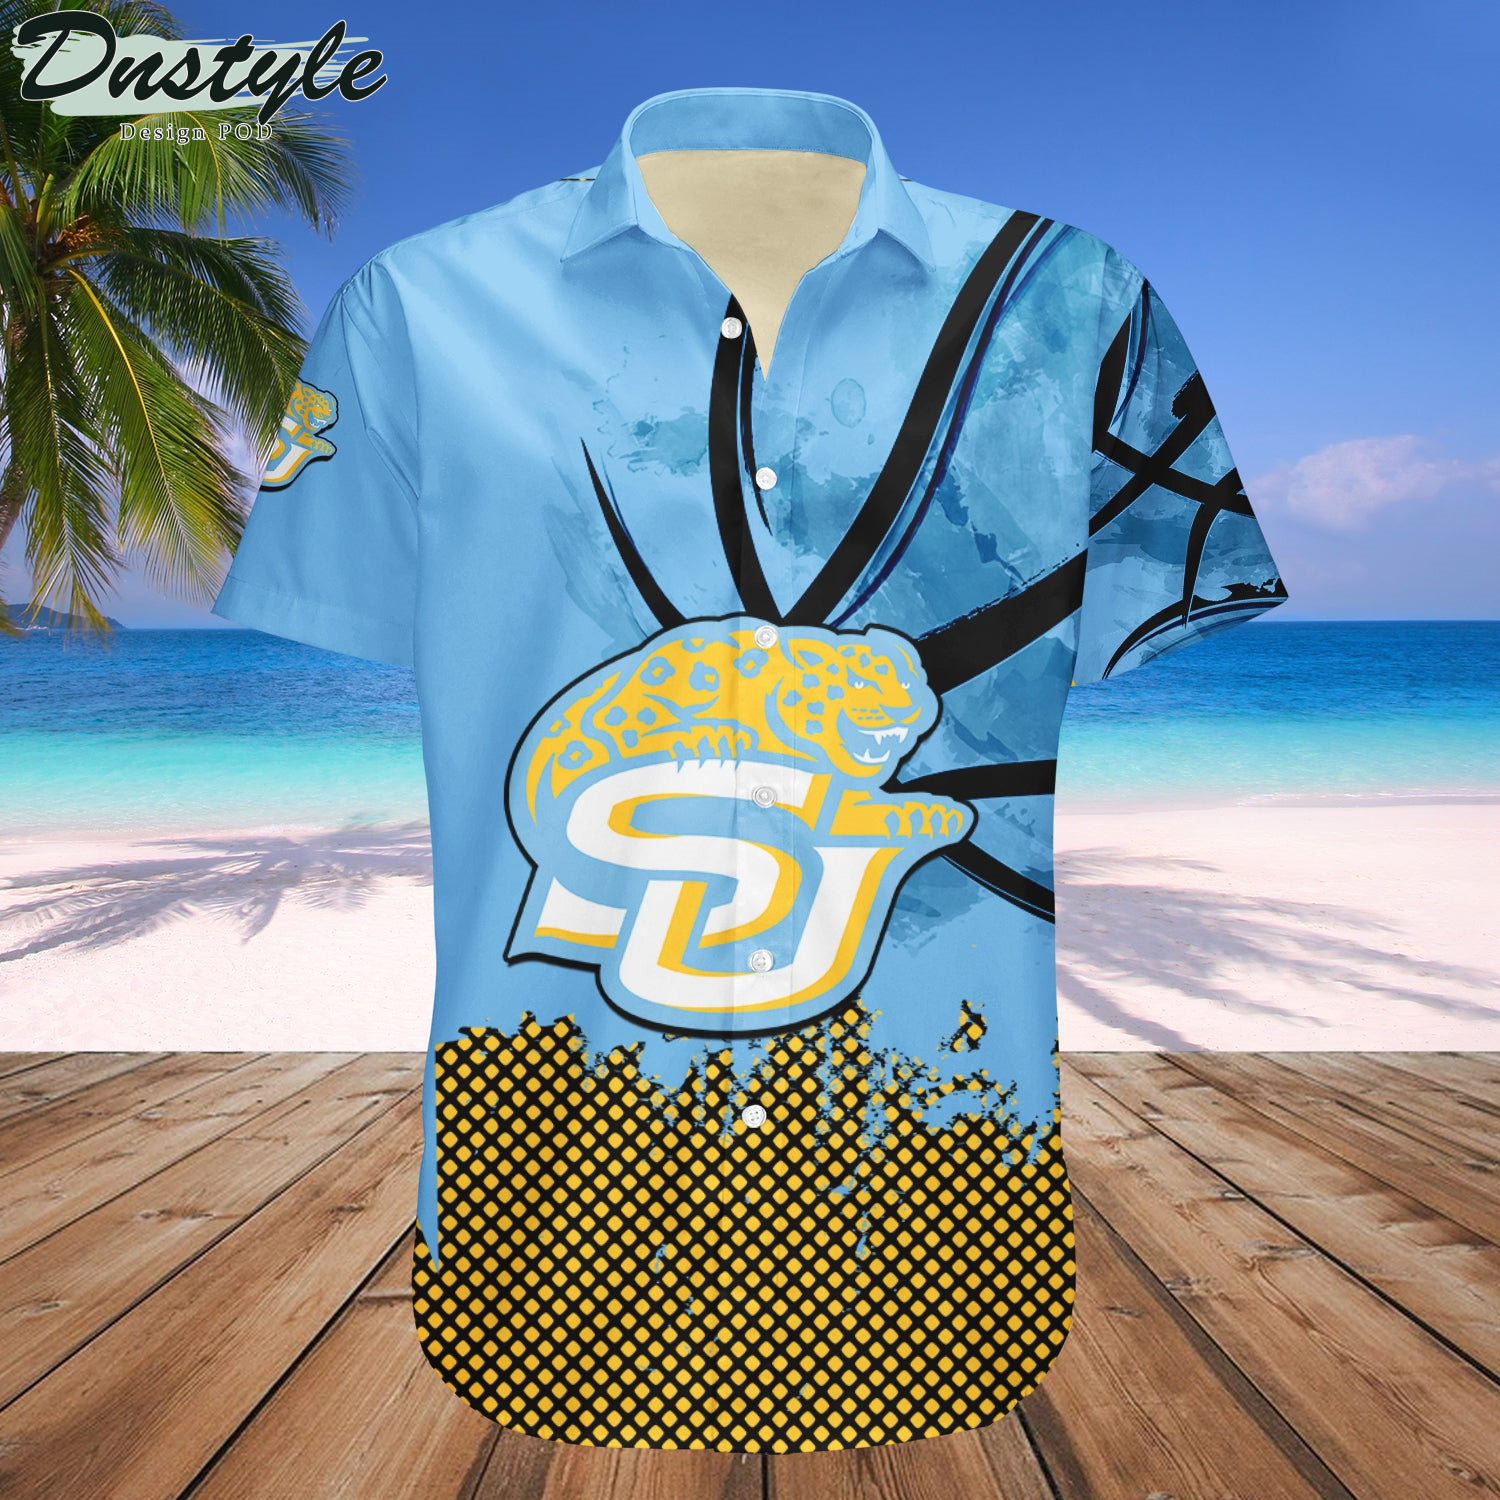 Southern Jaguars Basketball Net Grunge Pattern Hawaii Shirt